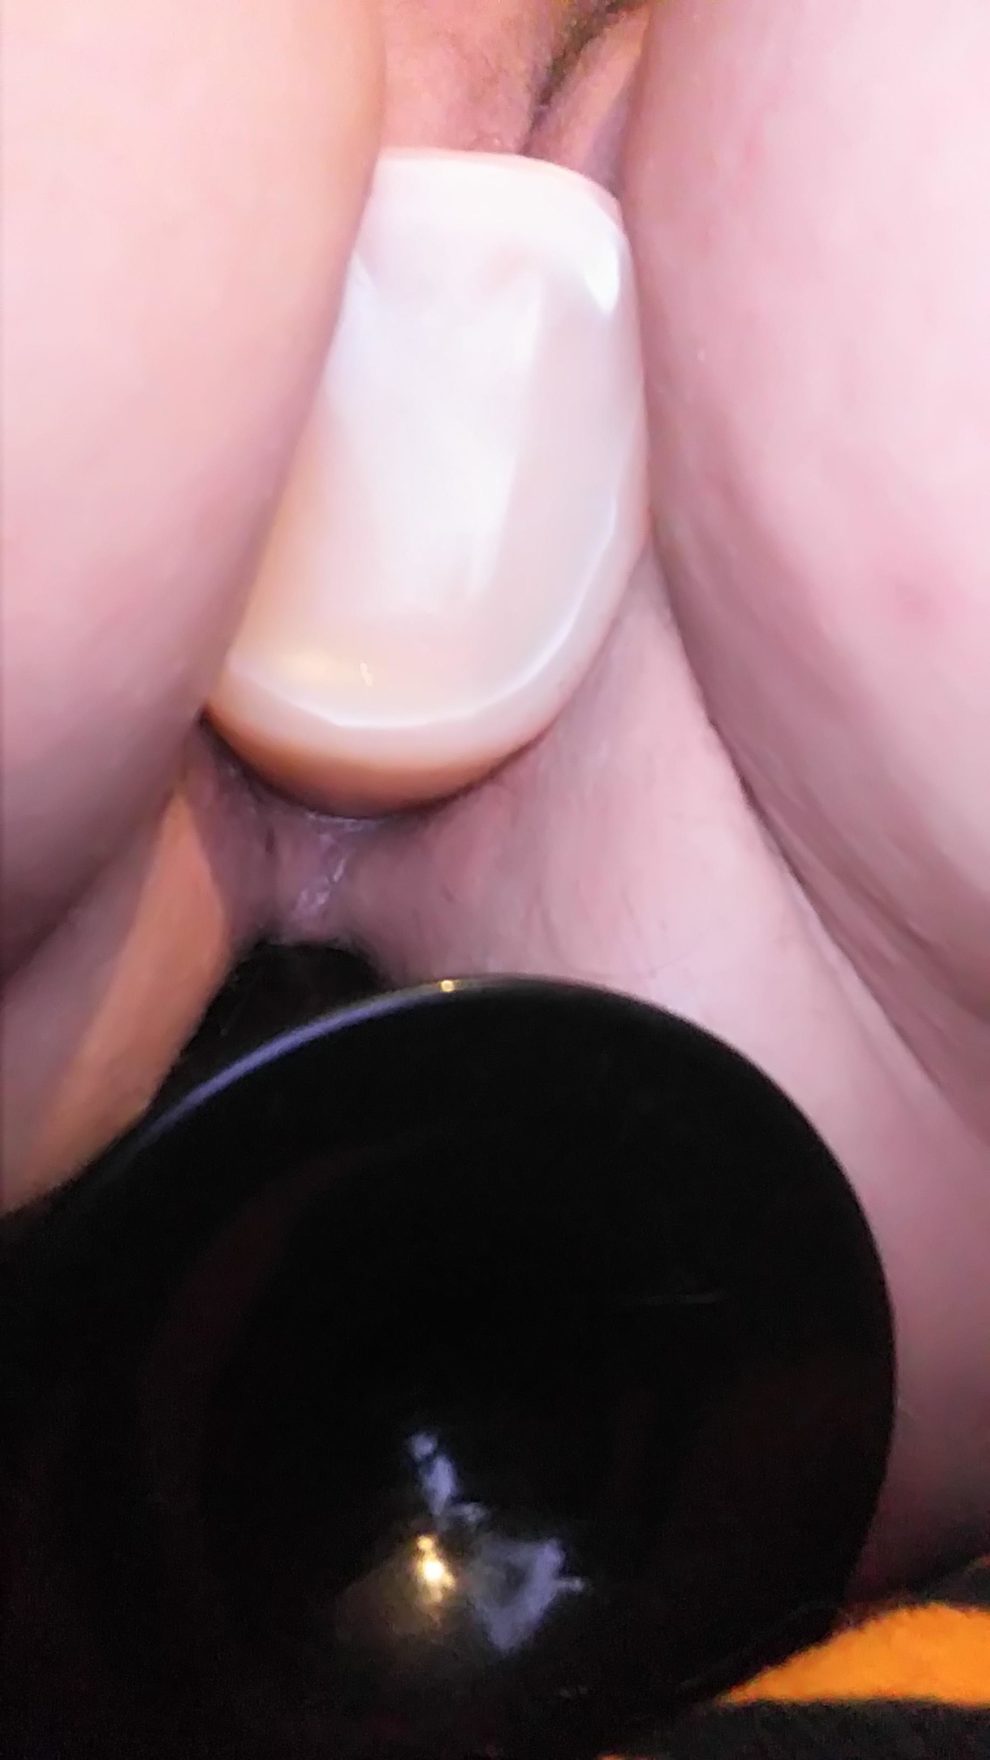 Double penetration dildos